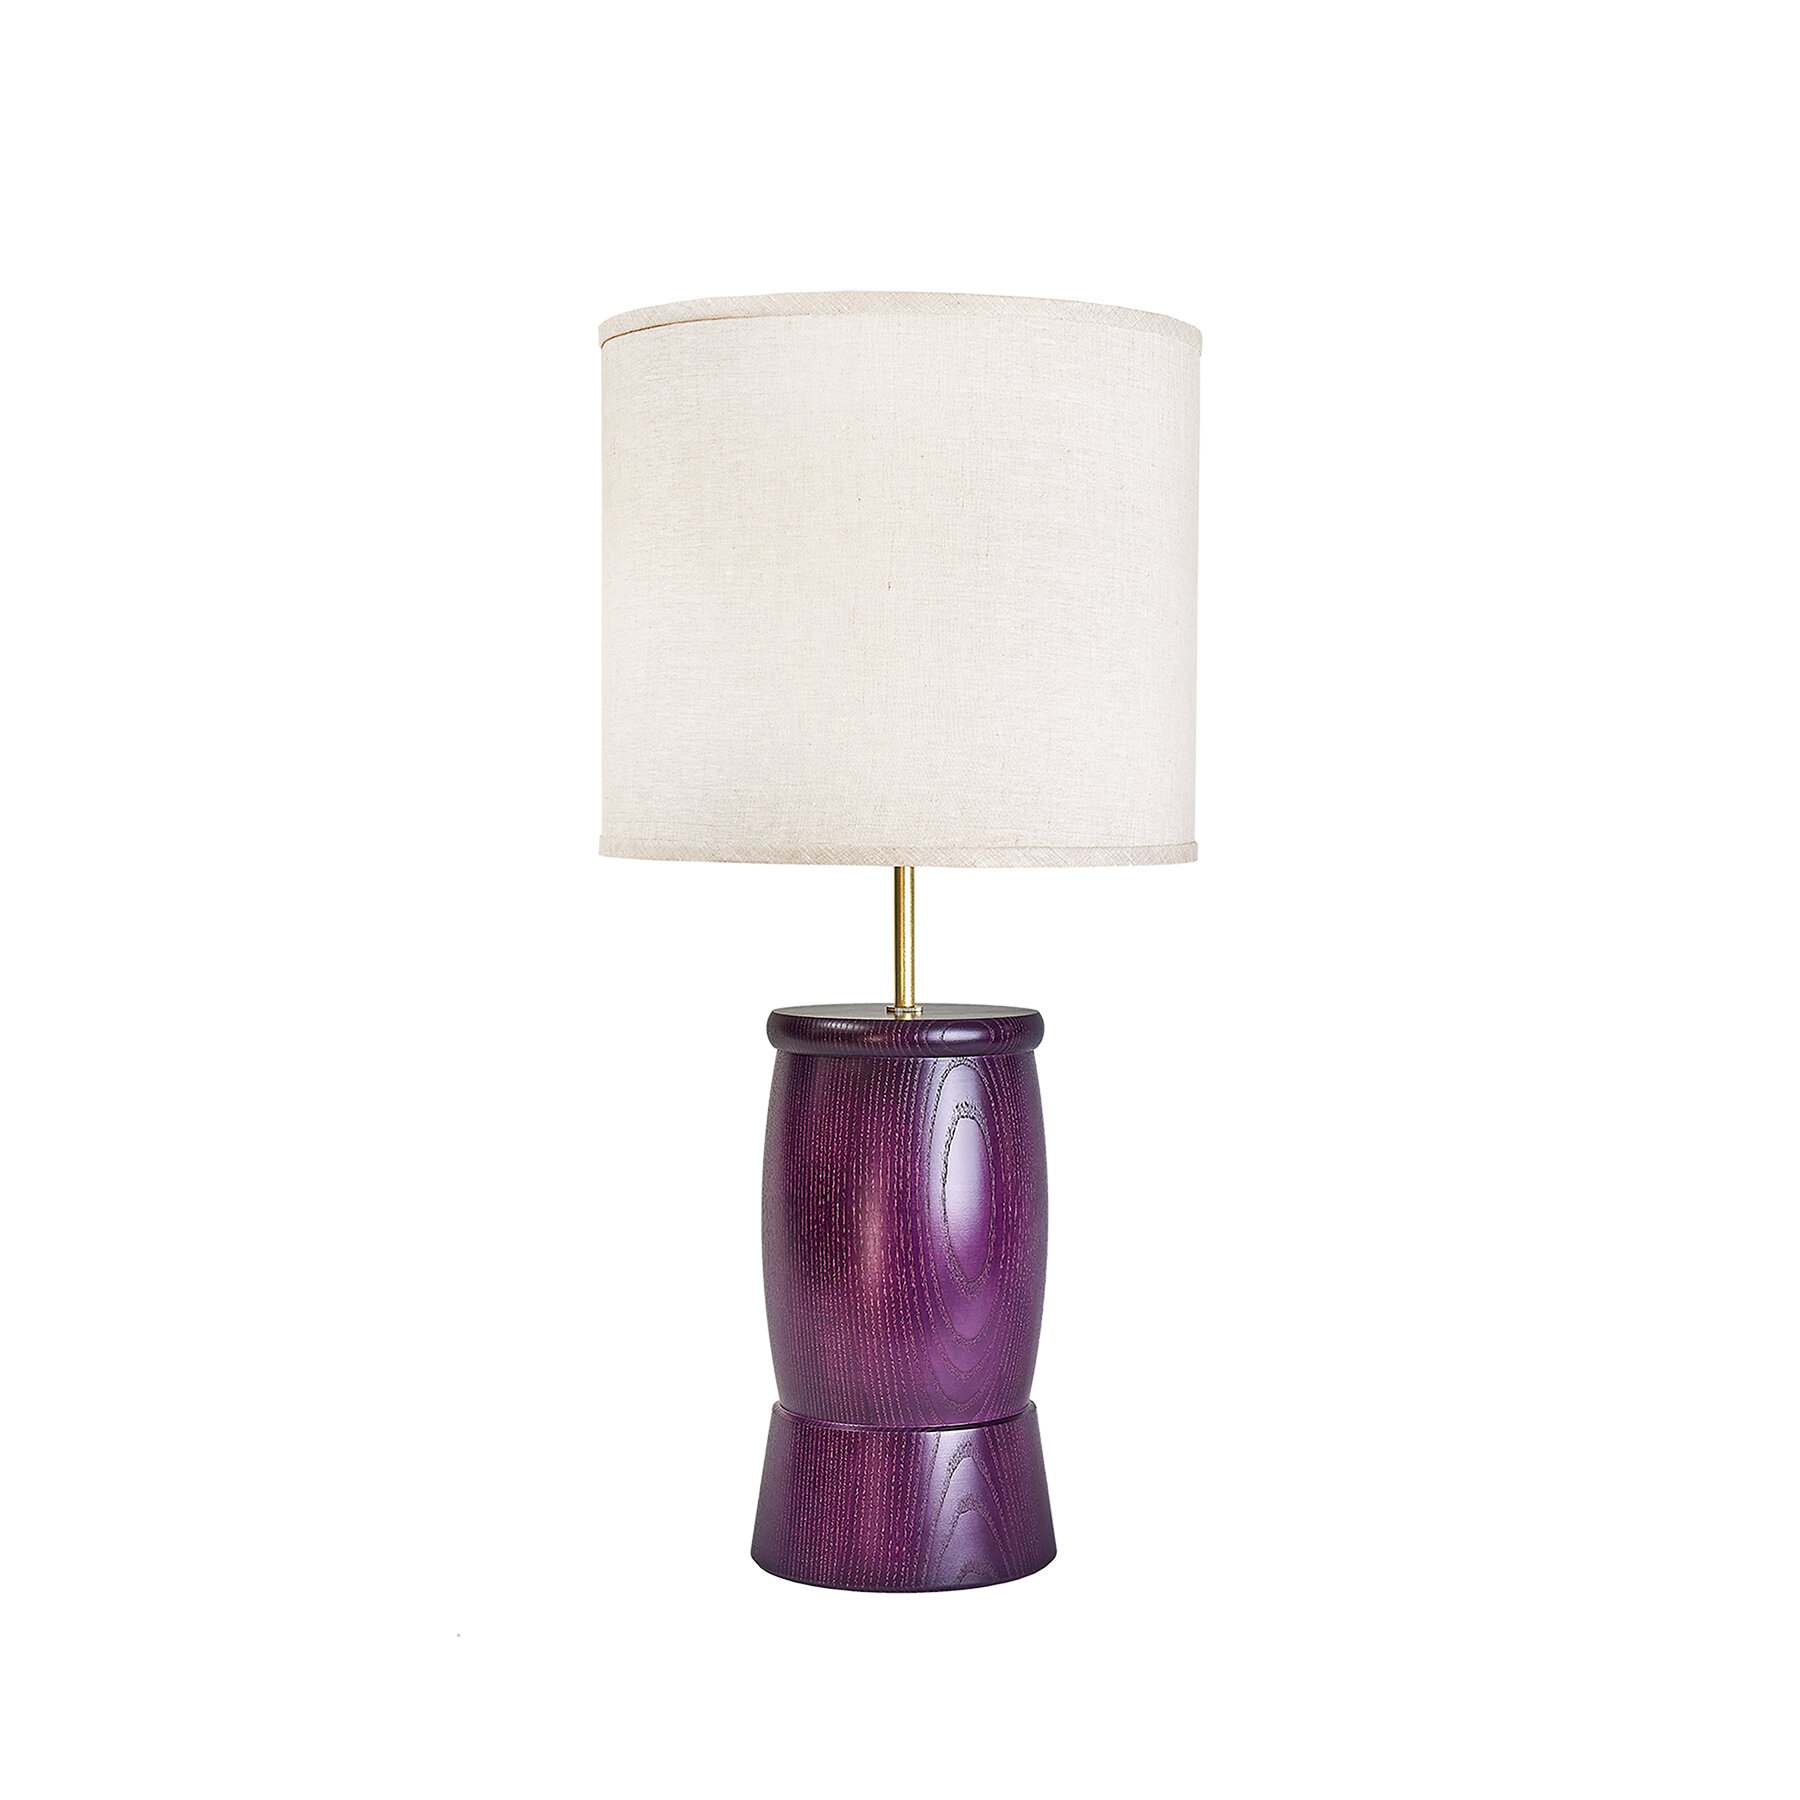 AMBOY SOFA LAMP - $1,281